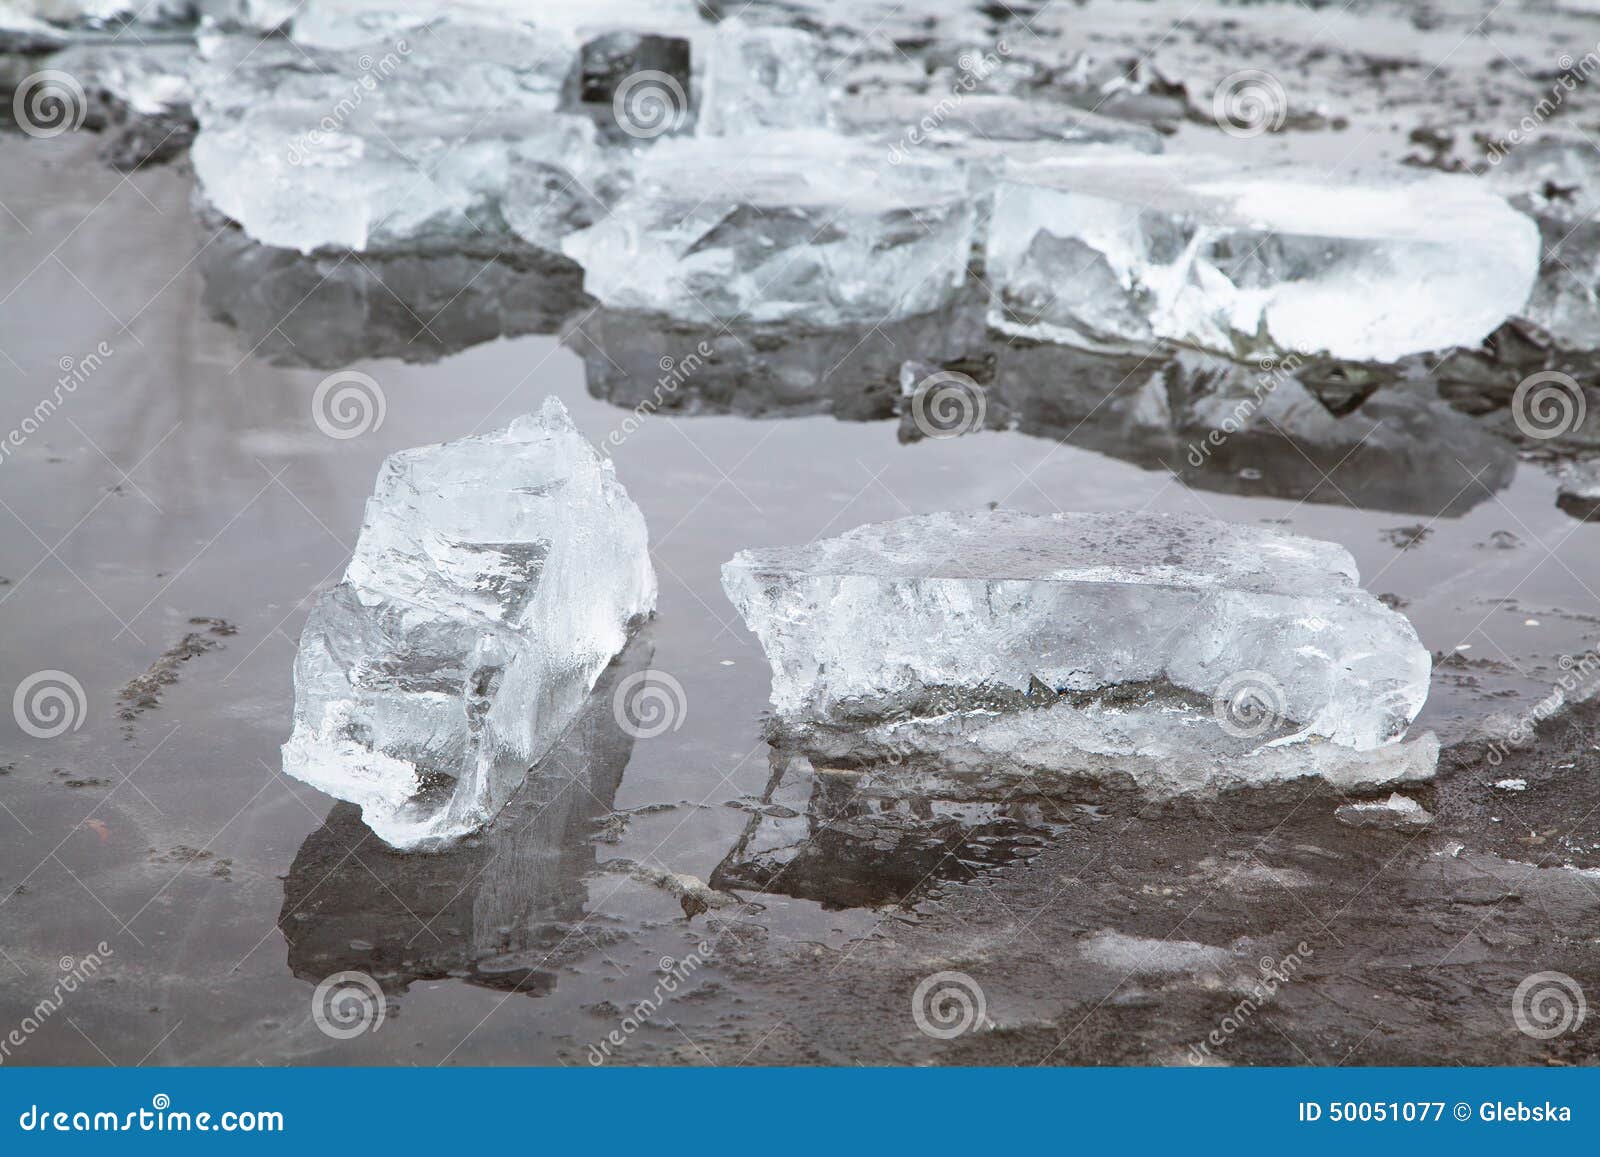 Кусочки льда на реке. Кусок льда. Куски льда на реке. Большие куски льда. Куски льда речка.